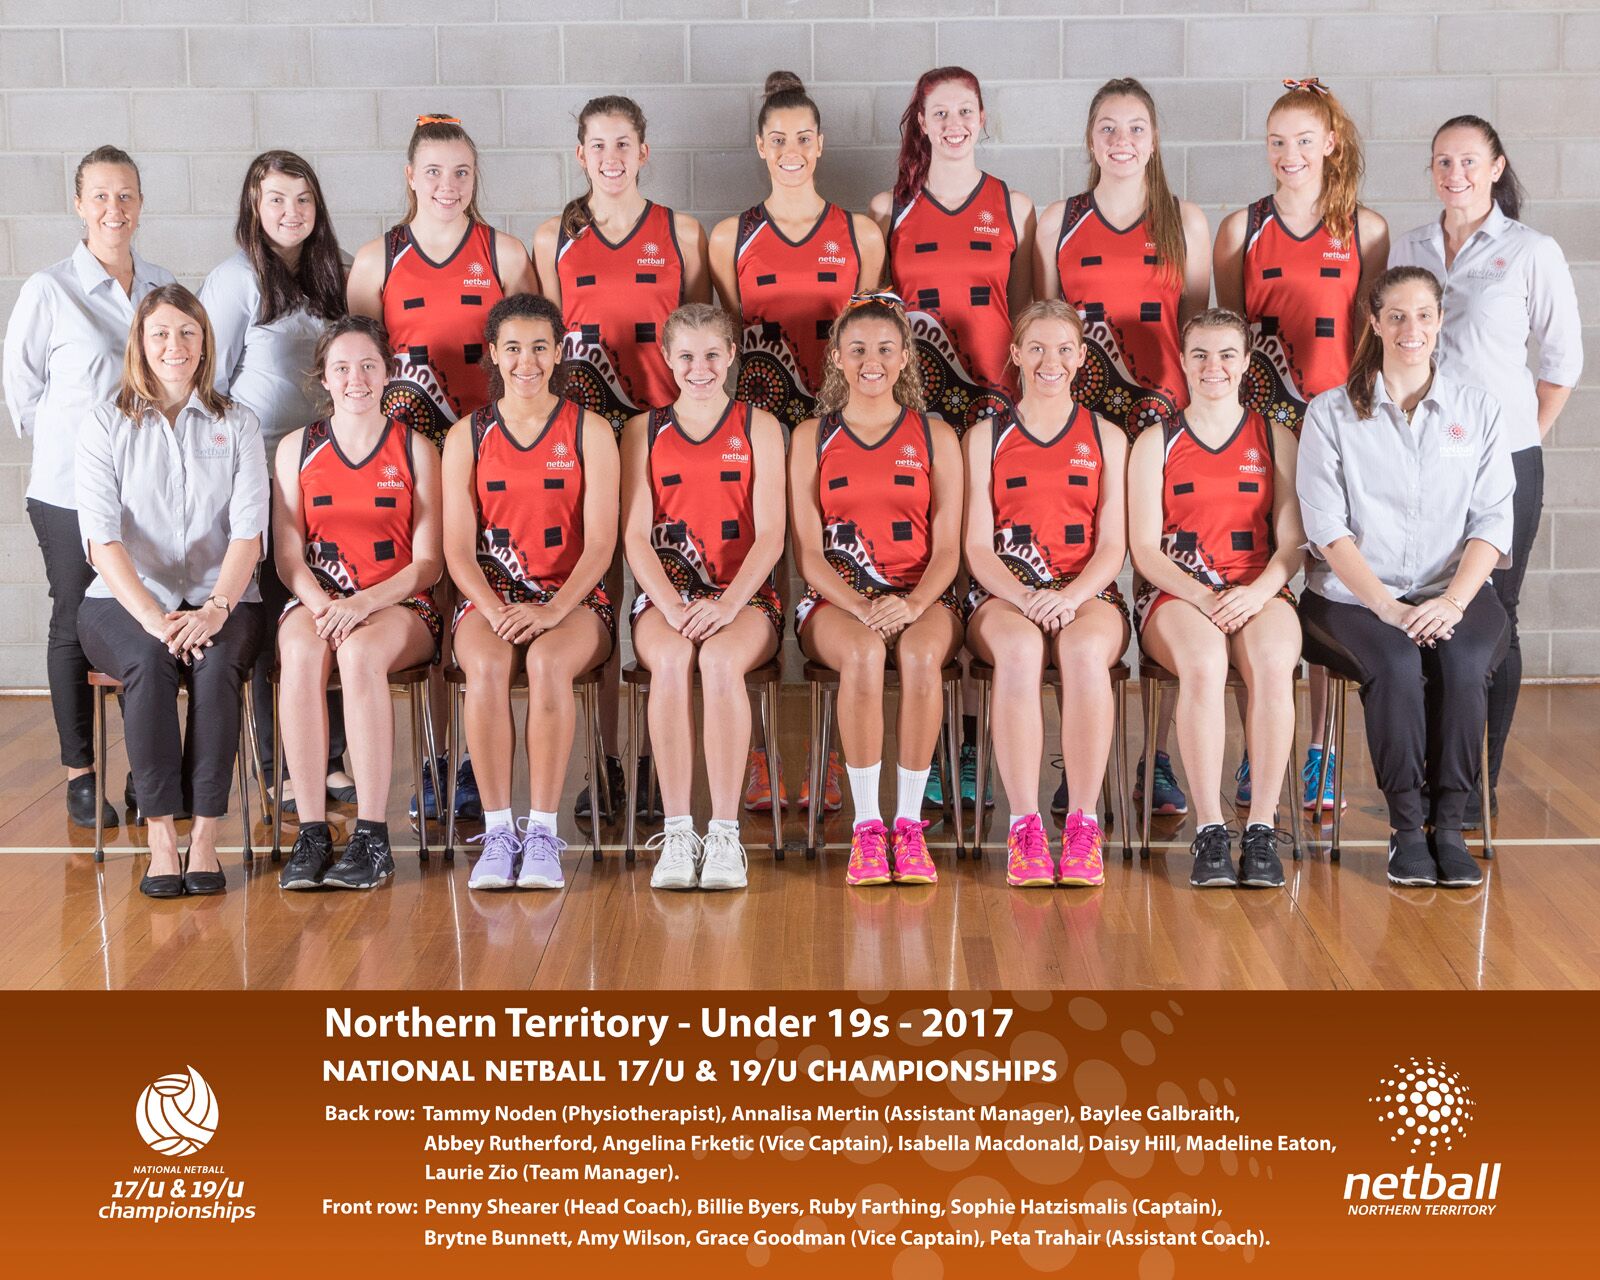 Netball NT State Team 2017 - 19U Team Photo with Names